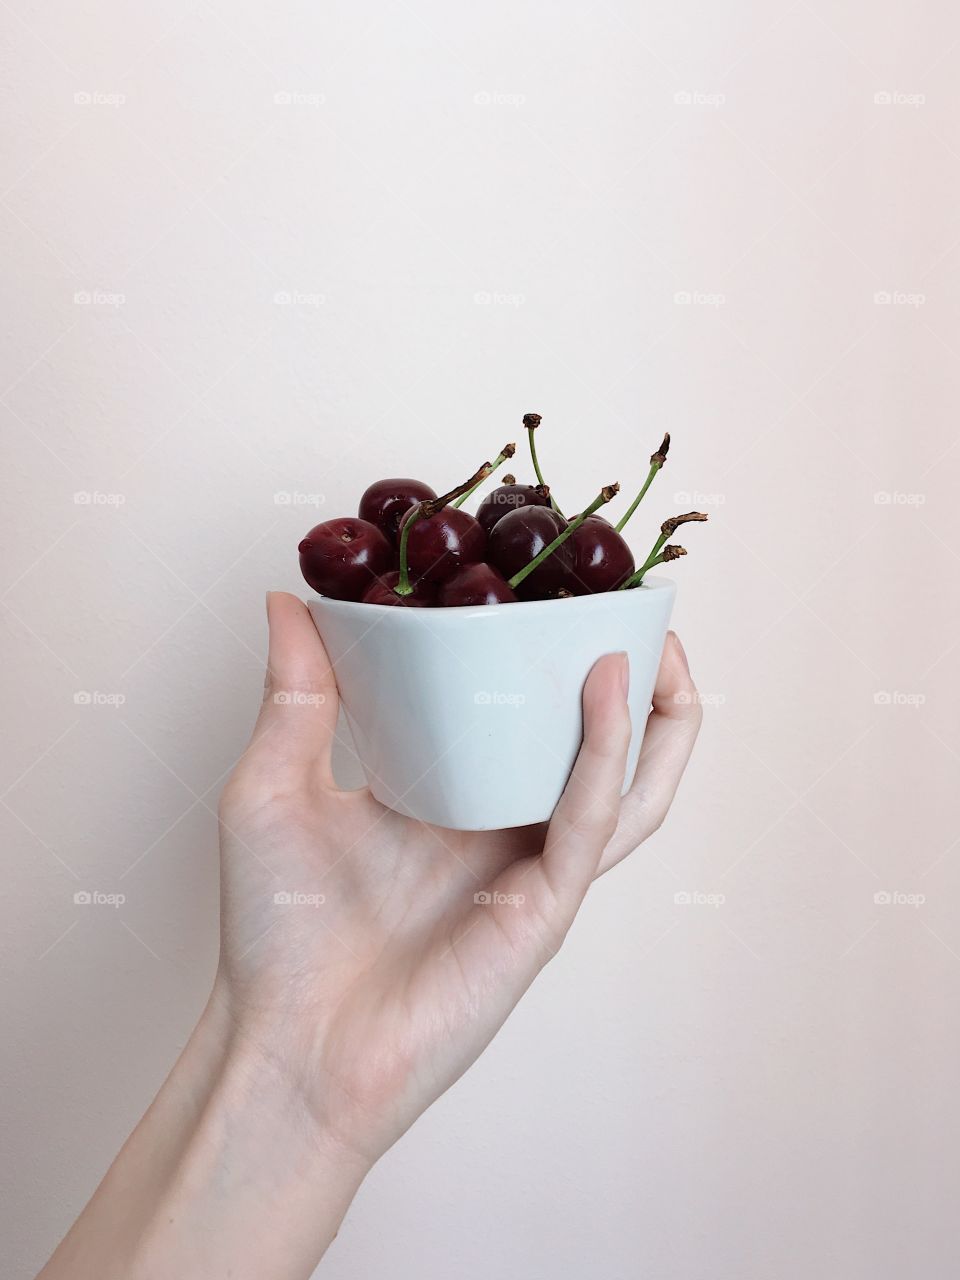 Cherries in a bowl 